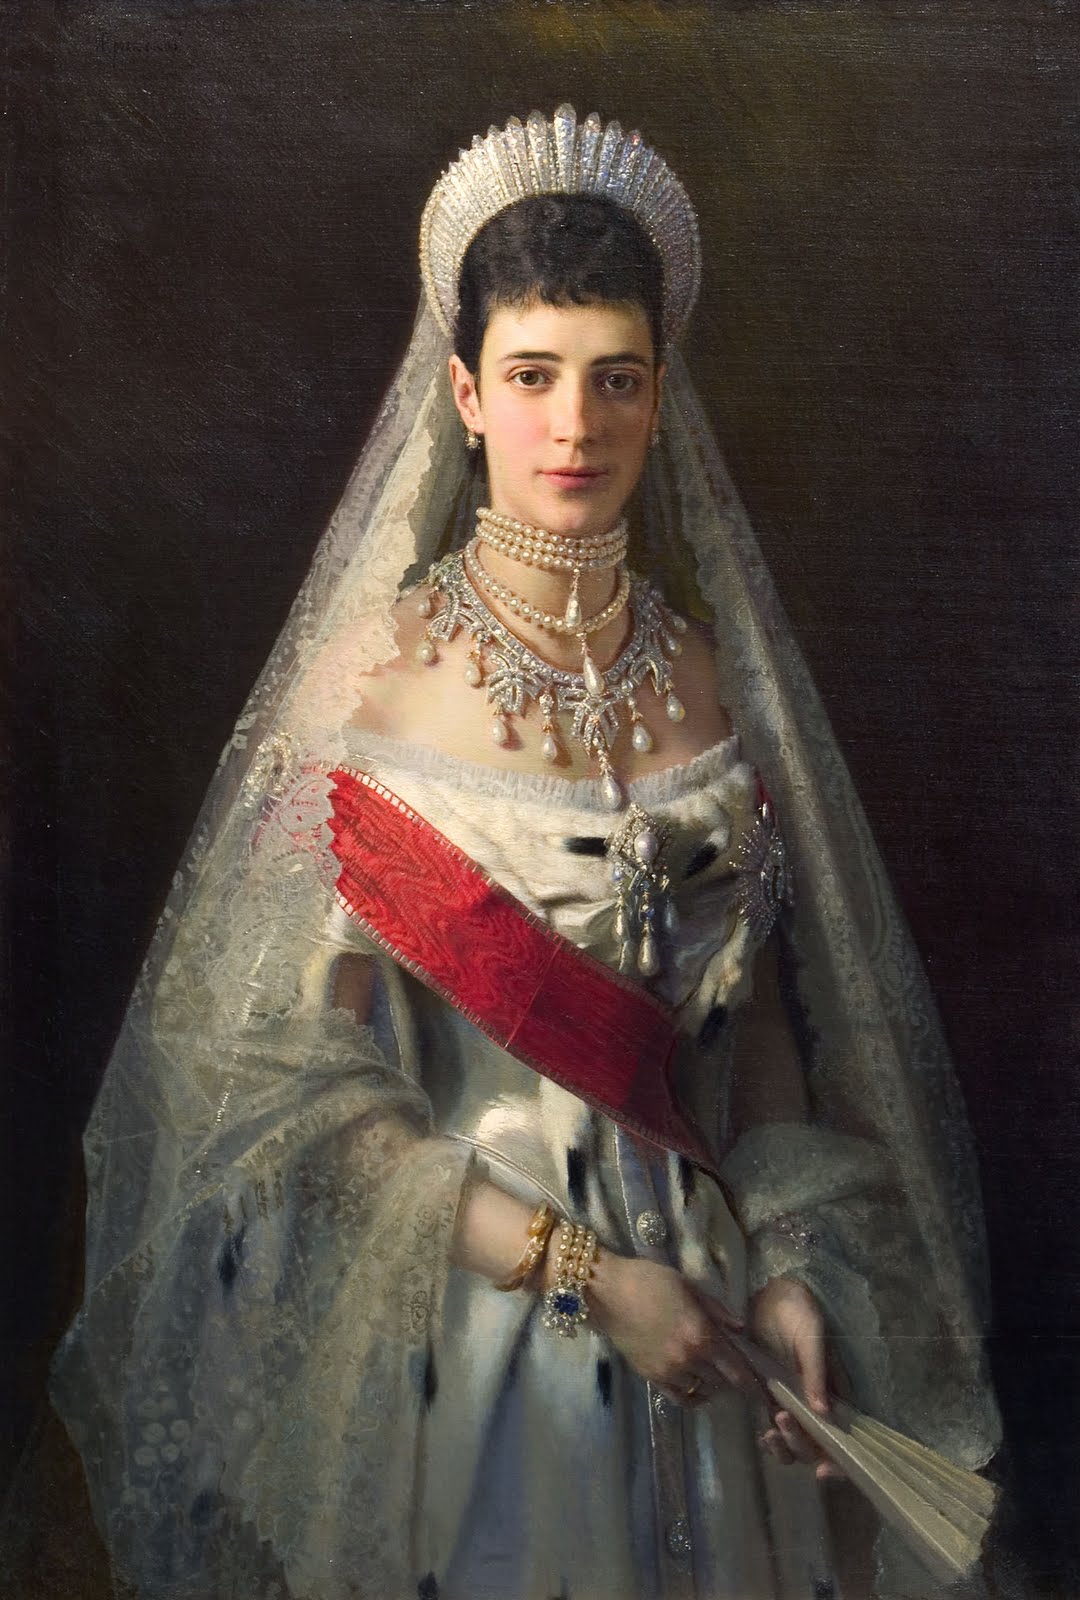 Pandantiv Imparateasa Maria Feodorovna a Rusiei